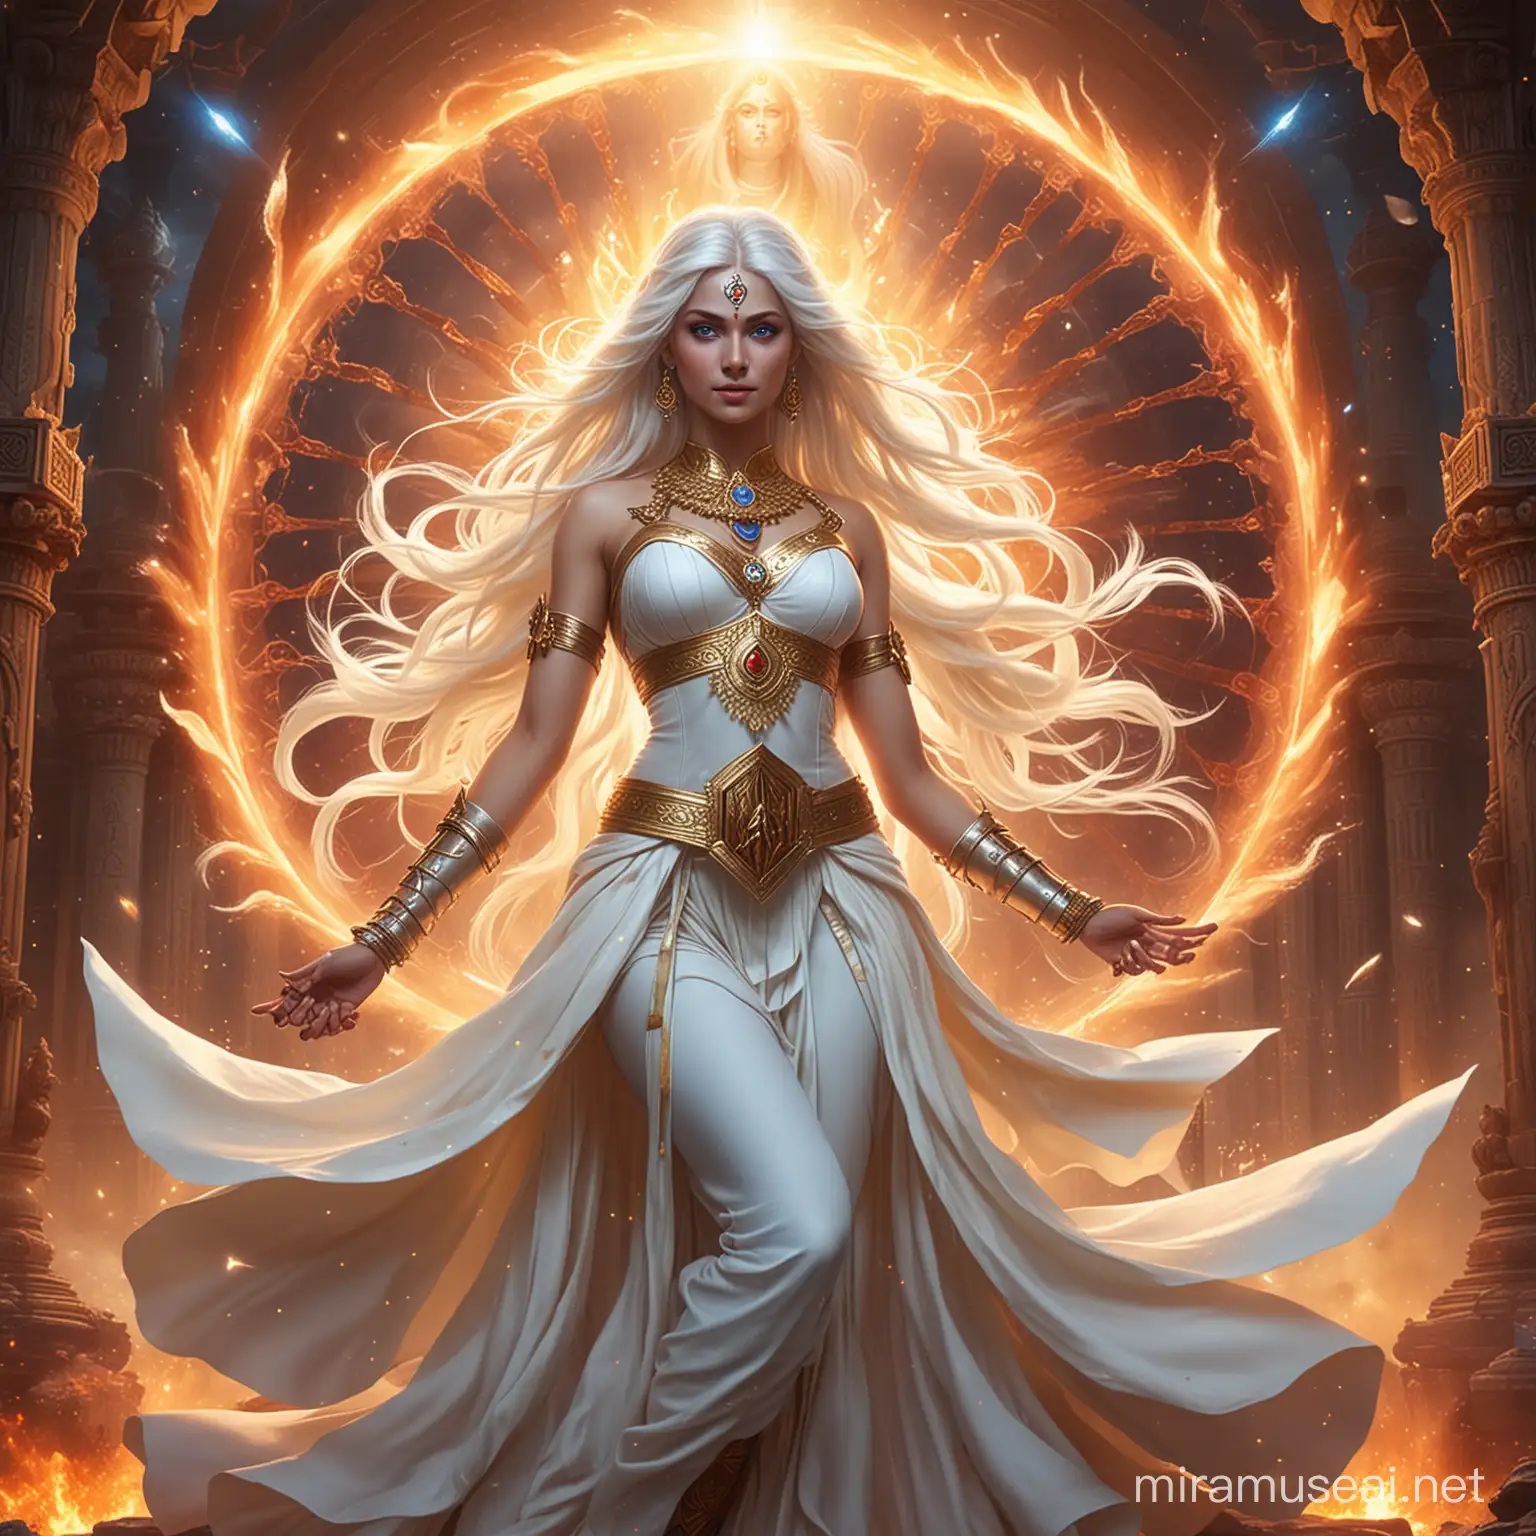 Empress Goddesses in Battle Amid Cosmic Energy